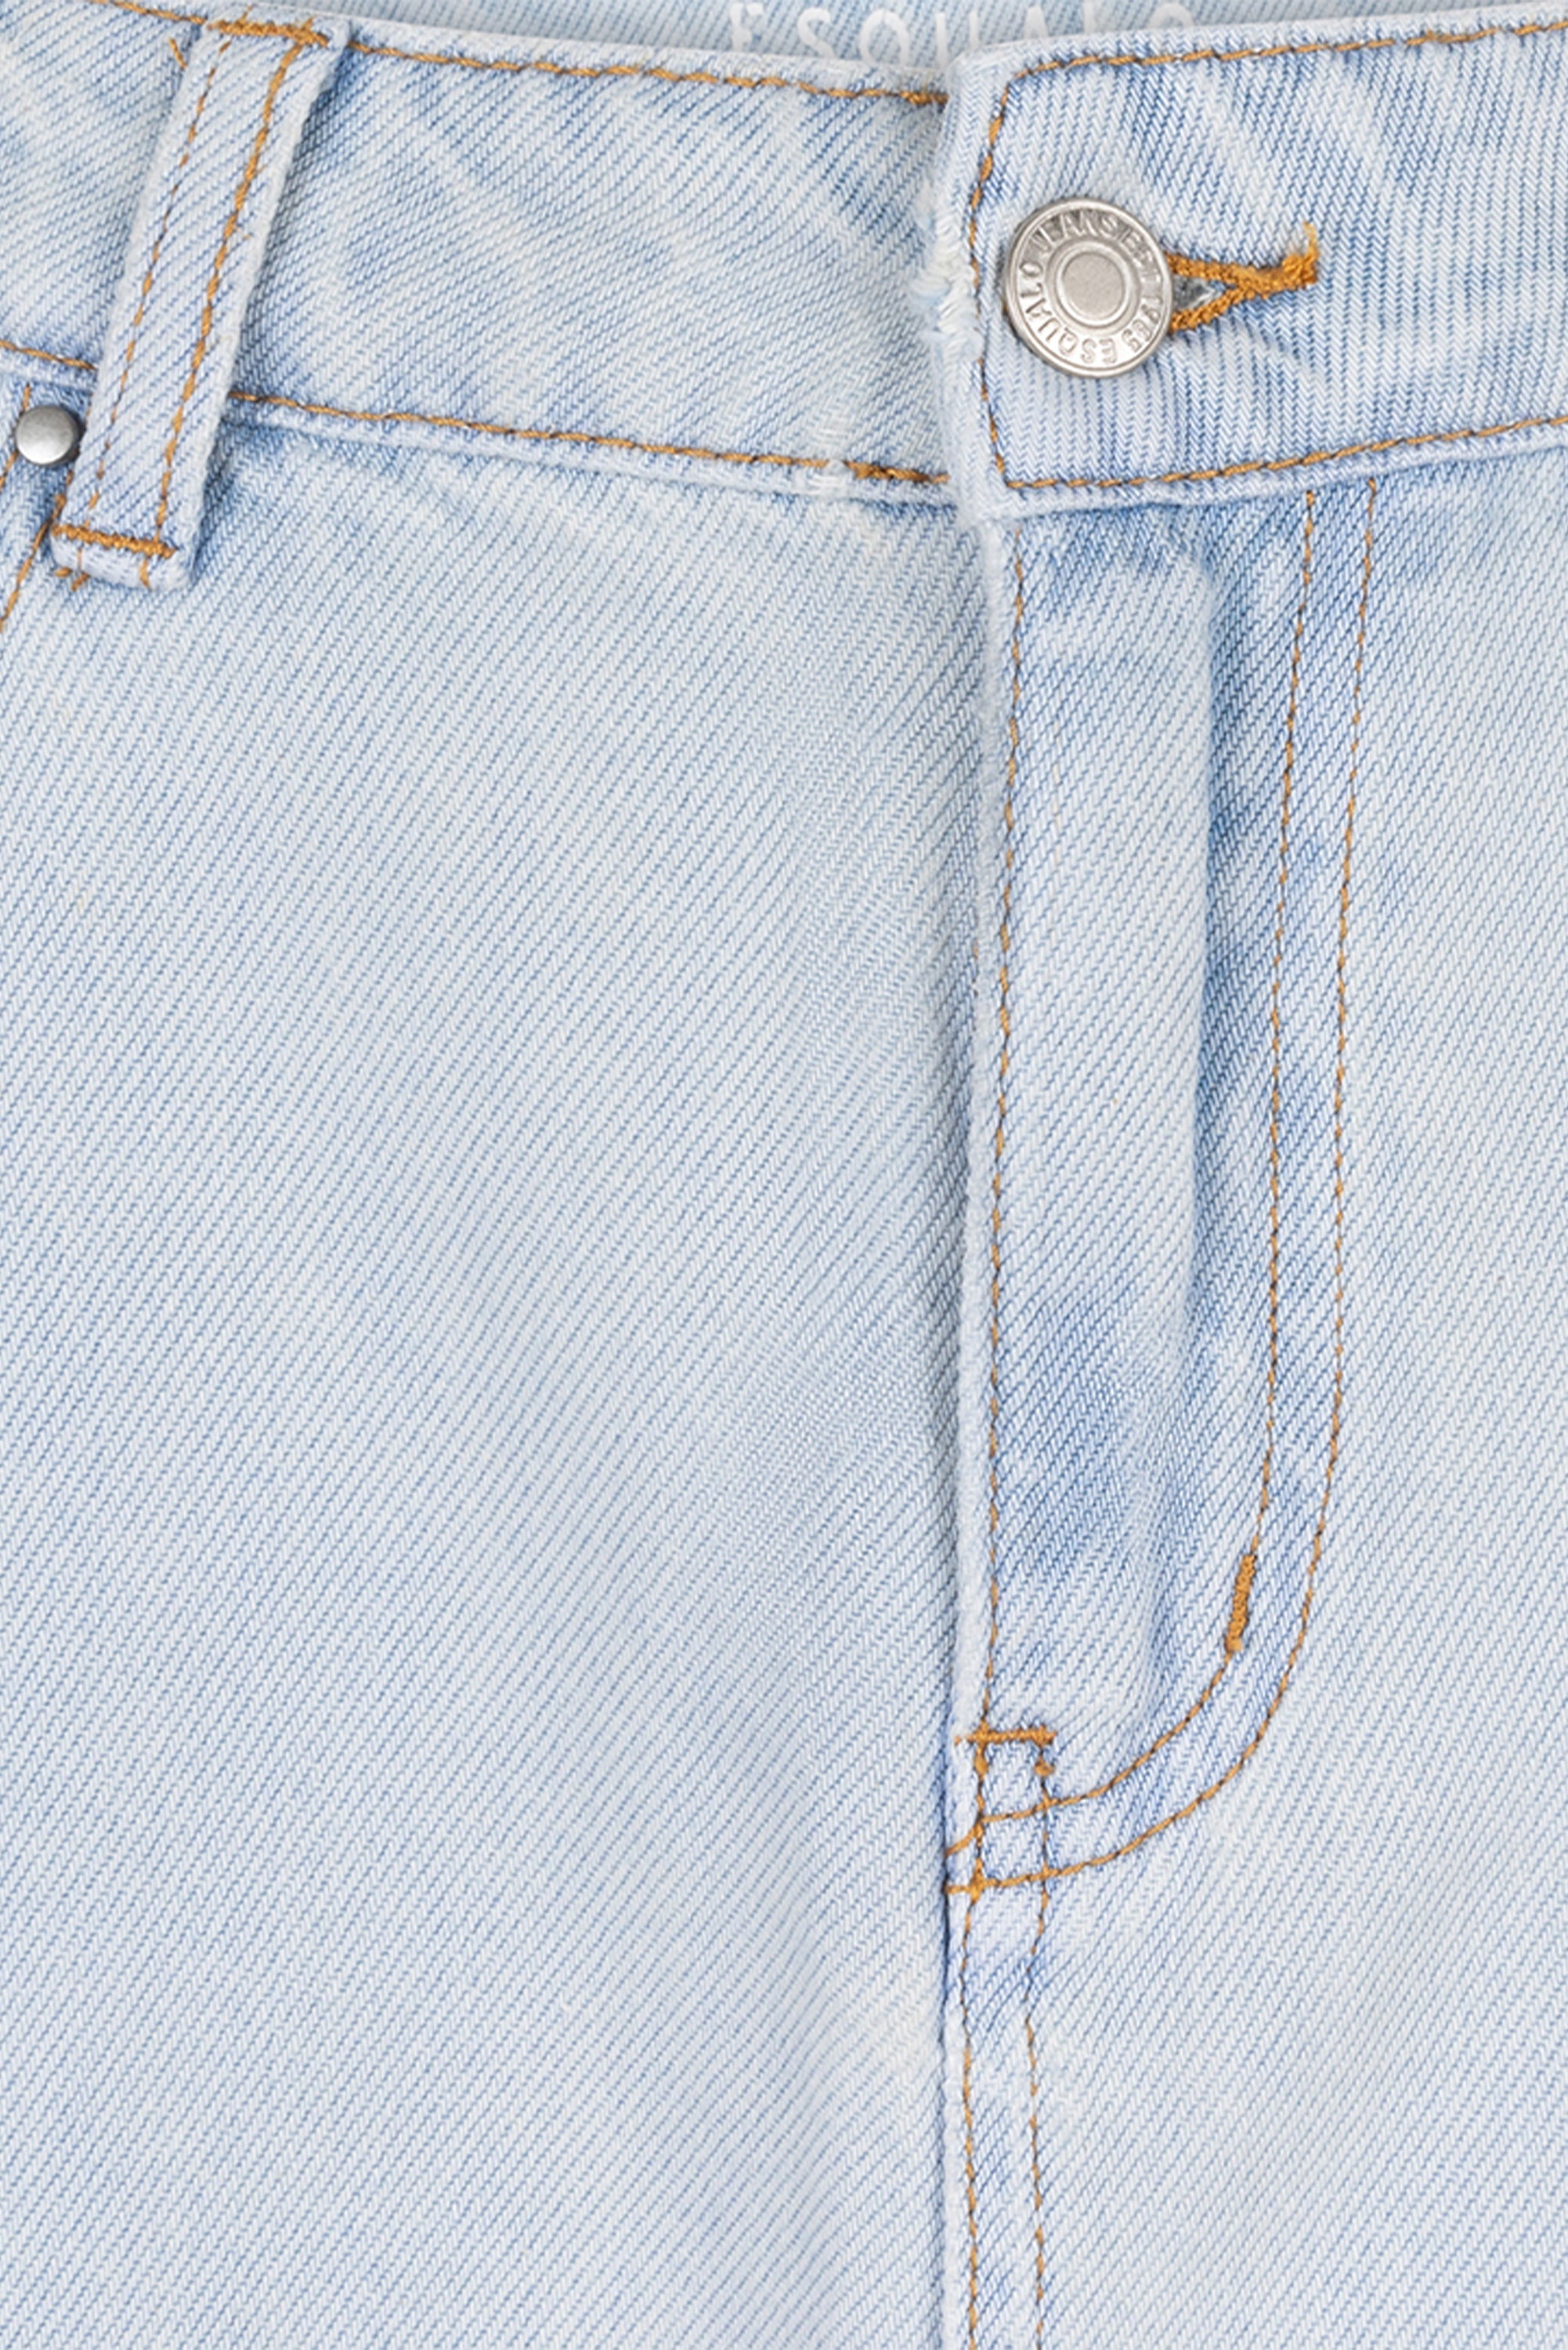 Button fly close up on Esqualo (HS2412210 Women's 5-Pocket Denim Midi Skirt in Light Blue Wash